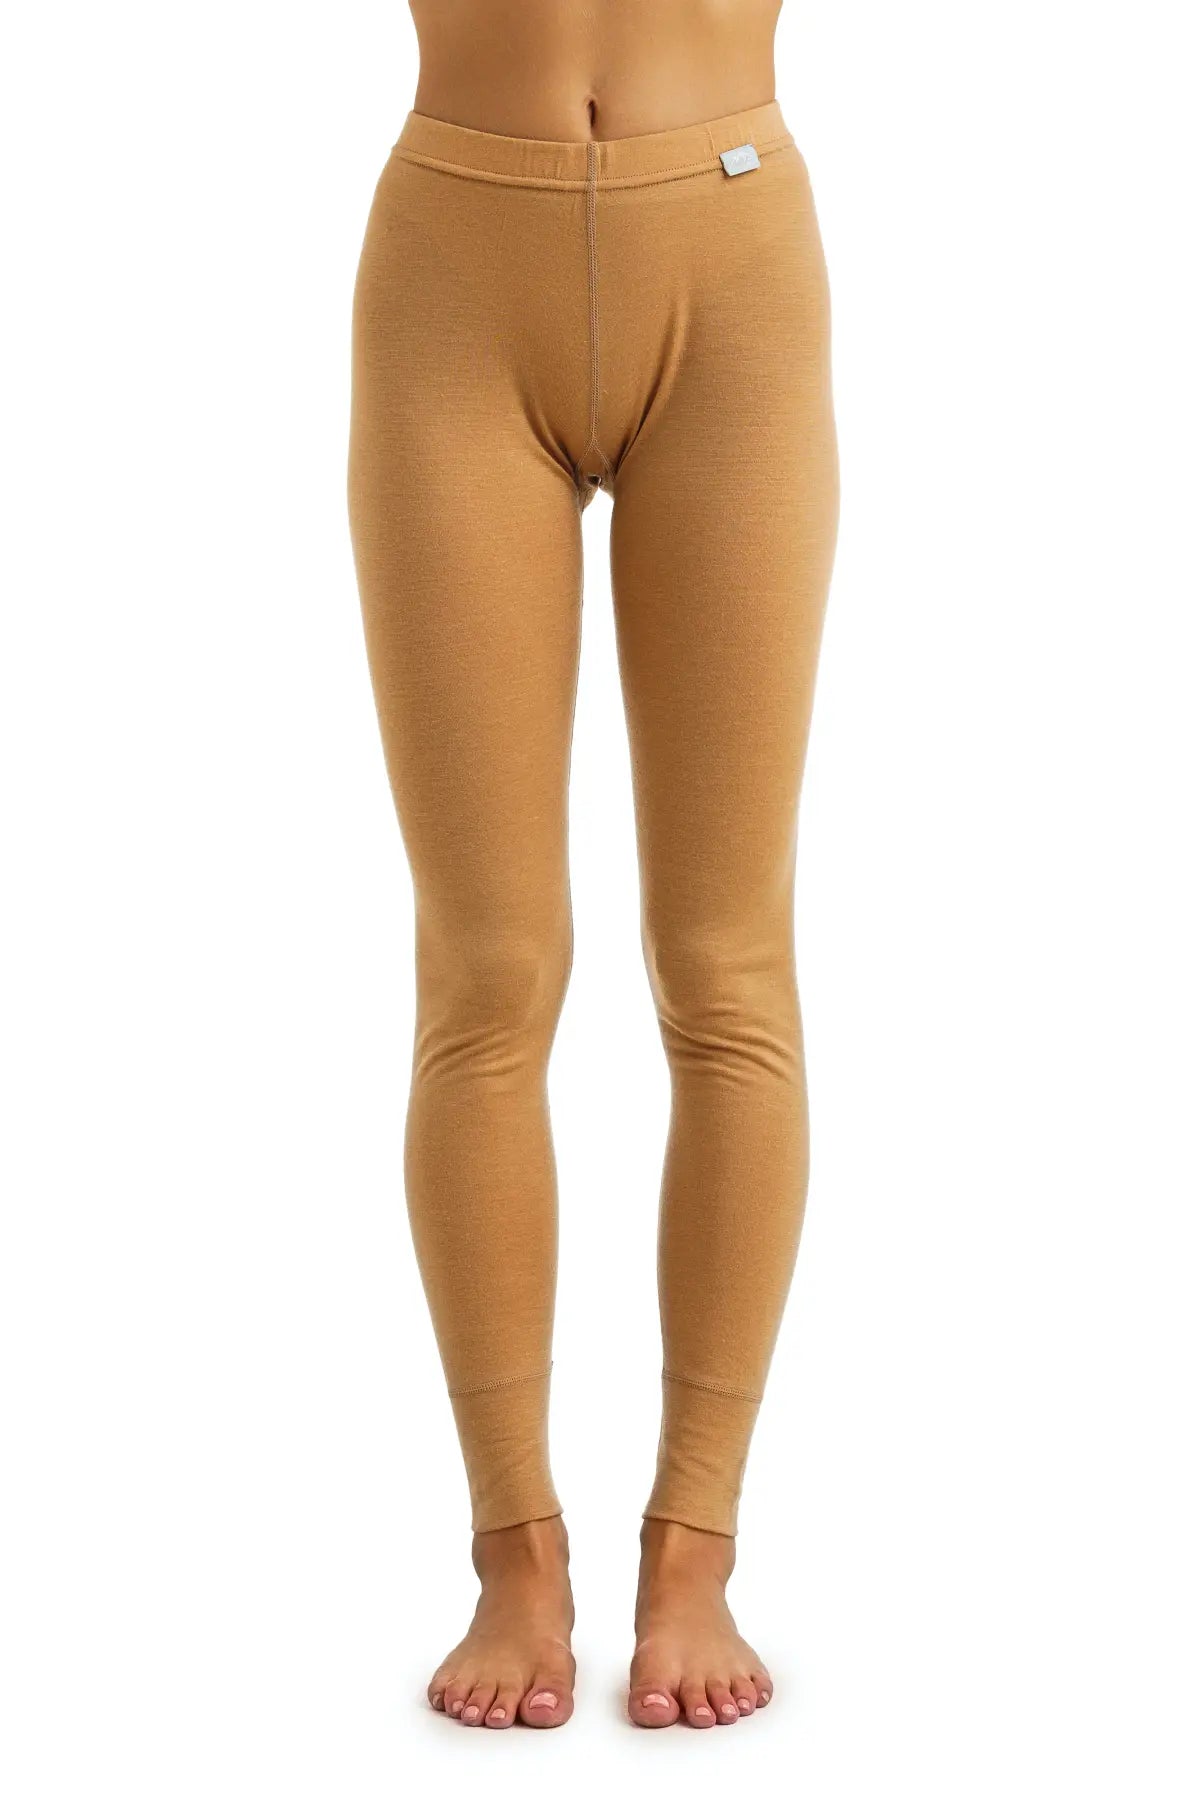 Women's Merino Wool Pants - Base Layer Snow White | Bottom | Underwear |  Thermal Leggings | Lightweight | – Merino Tech